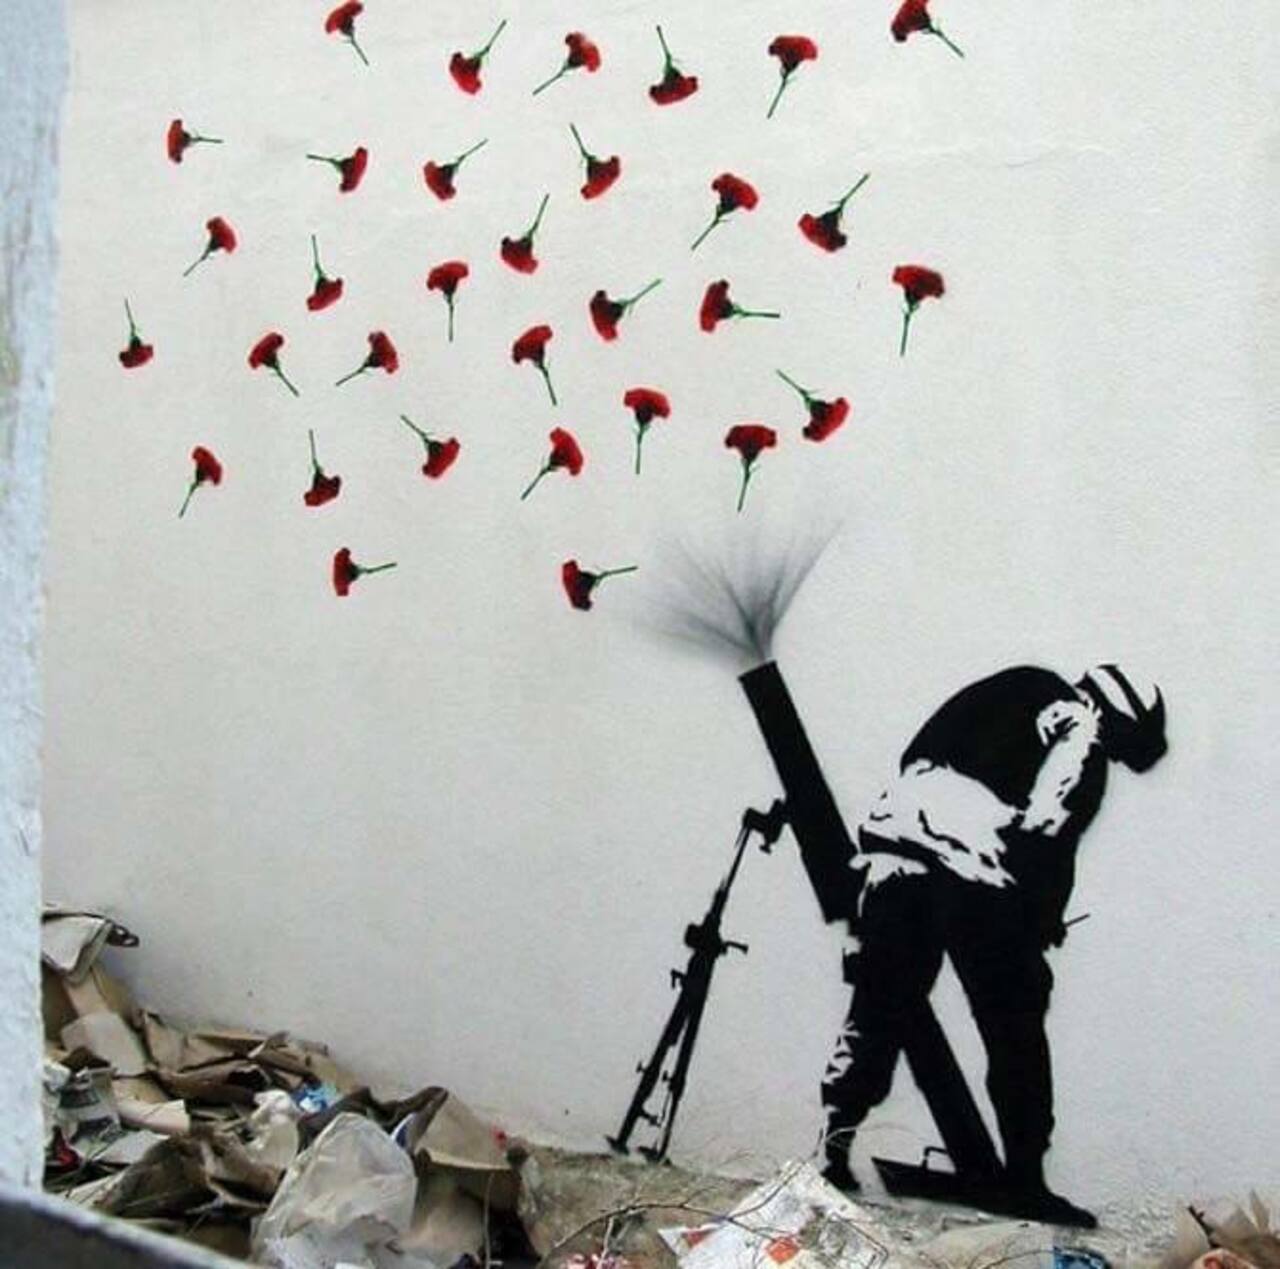 FLOWER BOMBS – #Creative #Streetart | Be ▲rtist - Be ▲rt https://beartistbeart.com/2016/08/17/flower-bombs-creative-streetart/?utm_campaign=crowdfire&utm_content=crowdfire&utm_medium=social&utm_source=twitter https://t.co/KzPsymHZAj